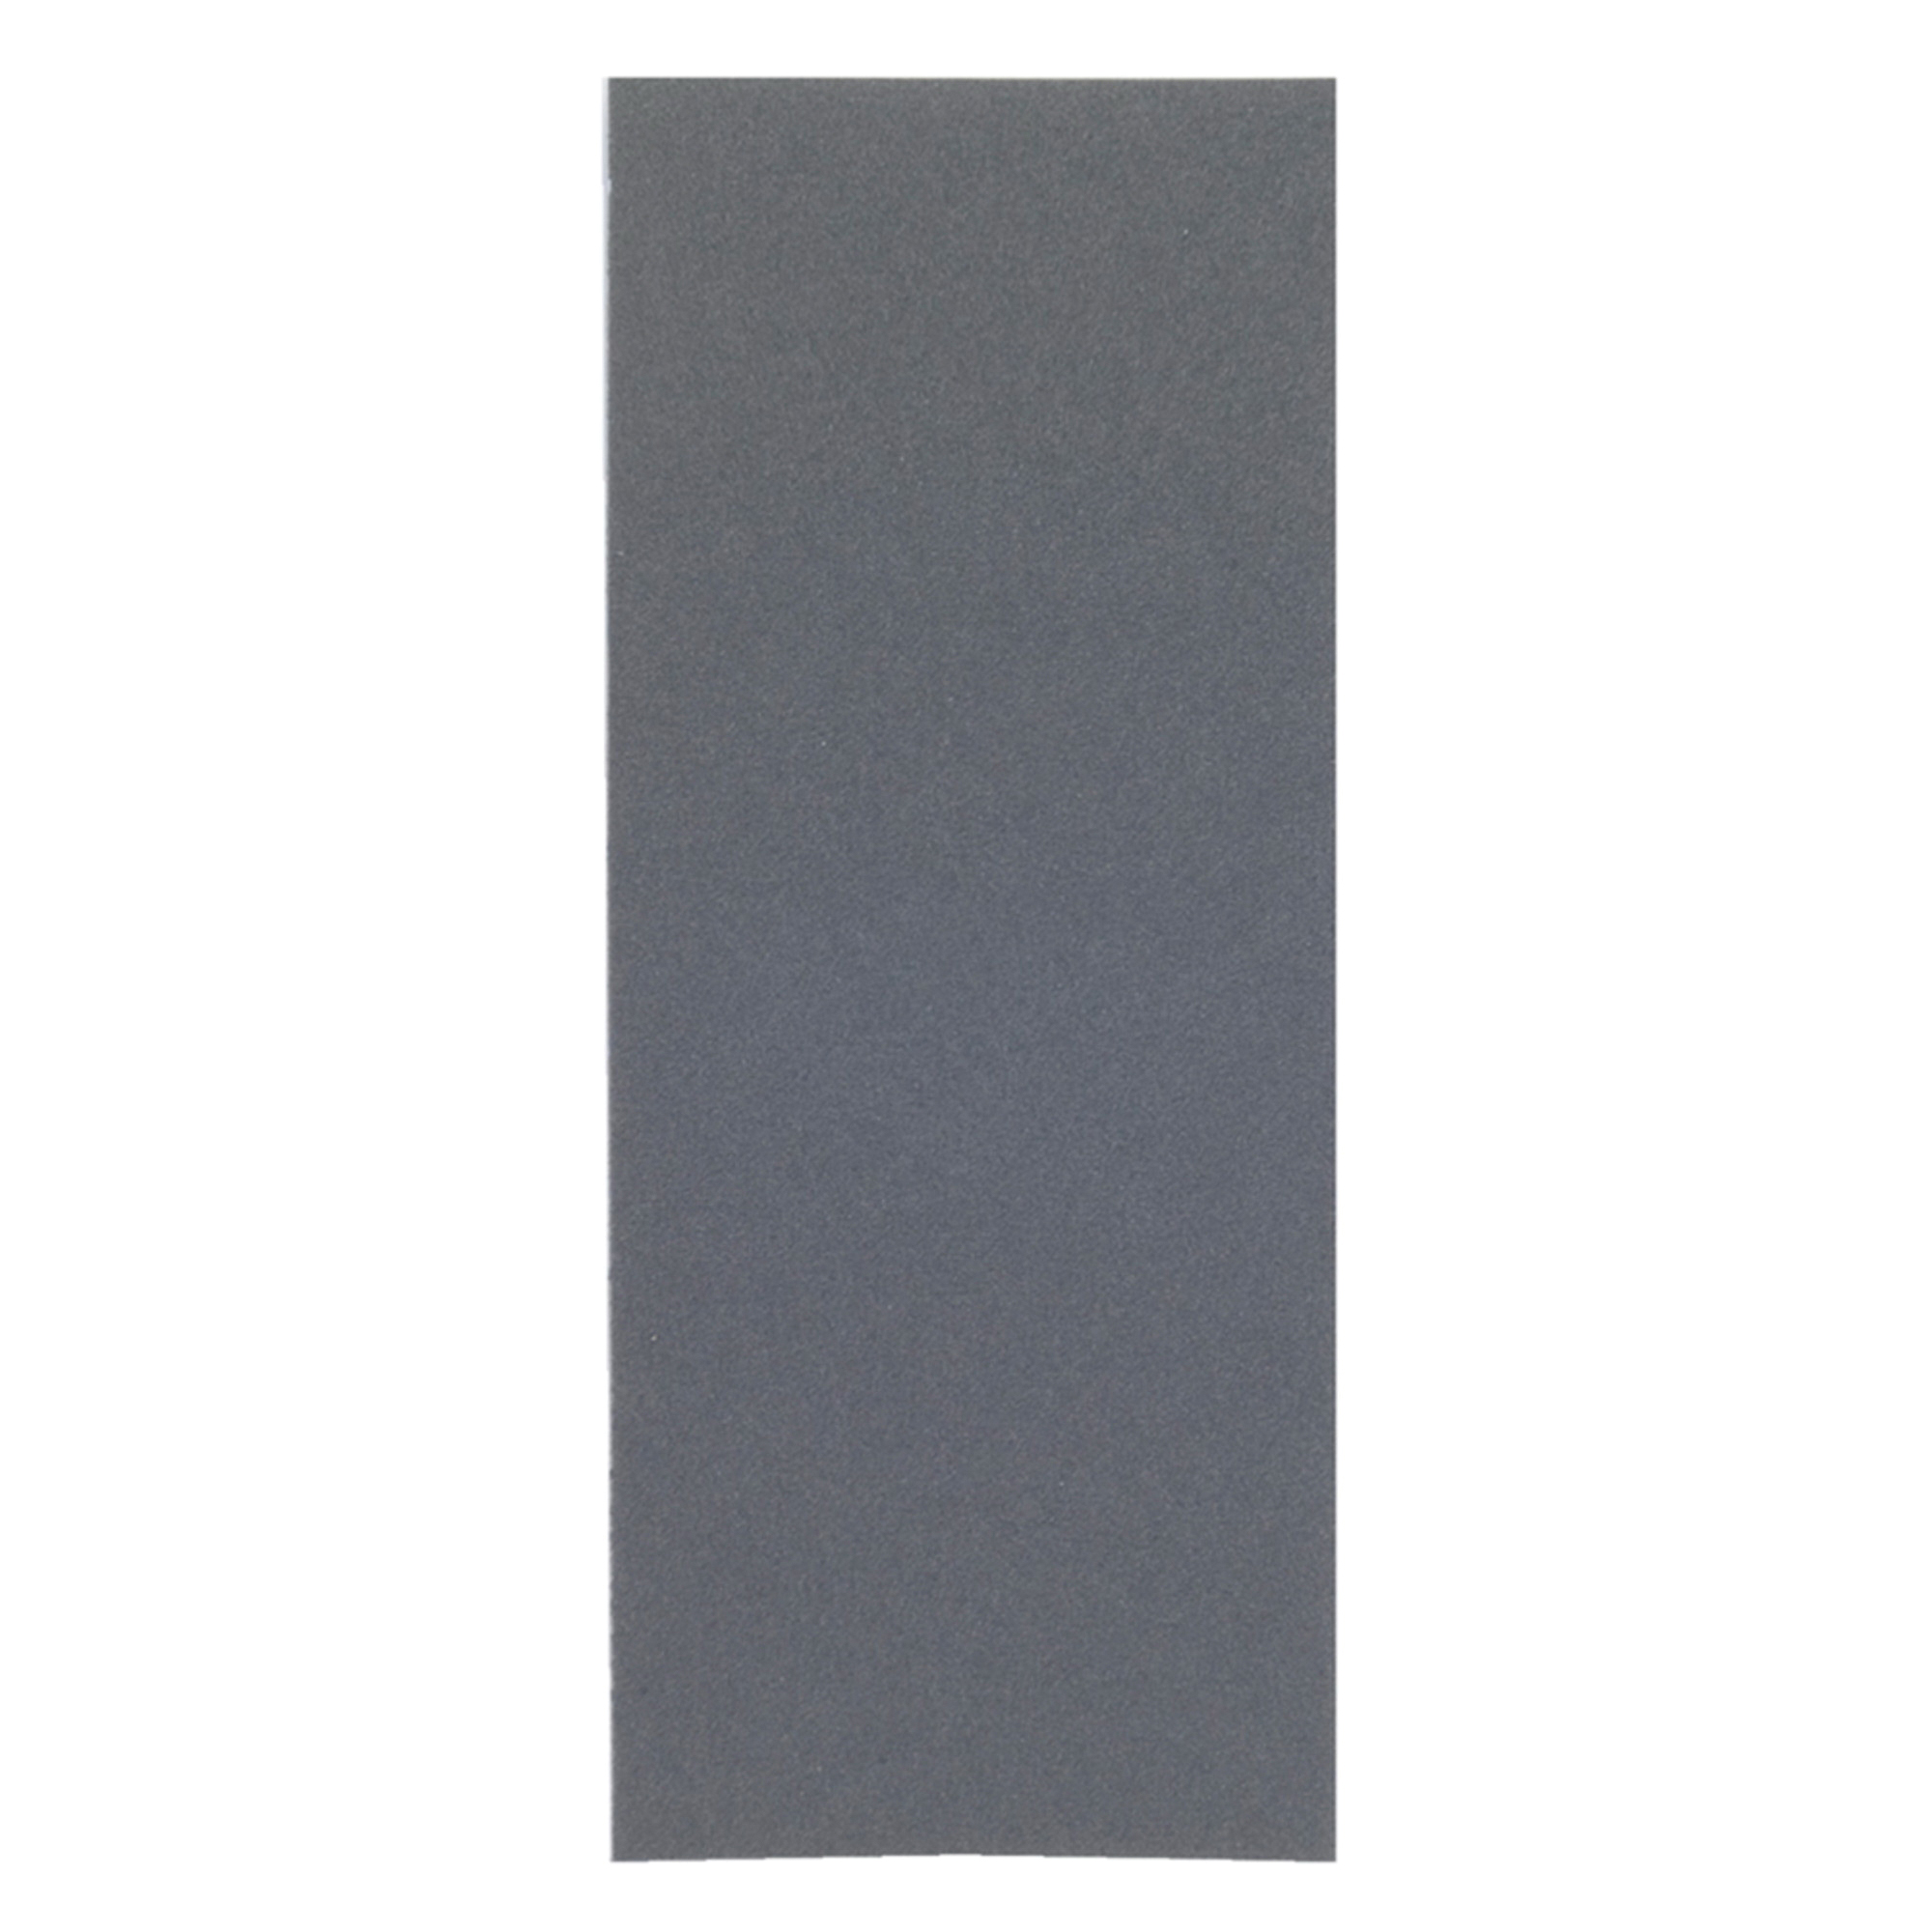 Norton® Blue-Bak™ 66261139359 T414 Coated Sandpaper Sheet, 9 in L x 3-2/3 in W, 220 Grit, Very Fine Grade, Silicon Carbide Abrasive, Paper Backing